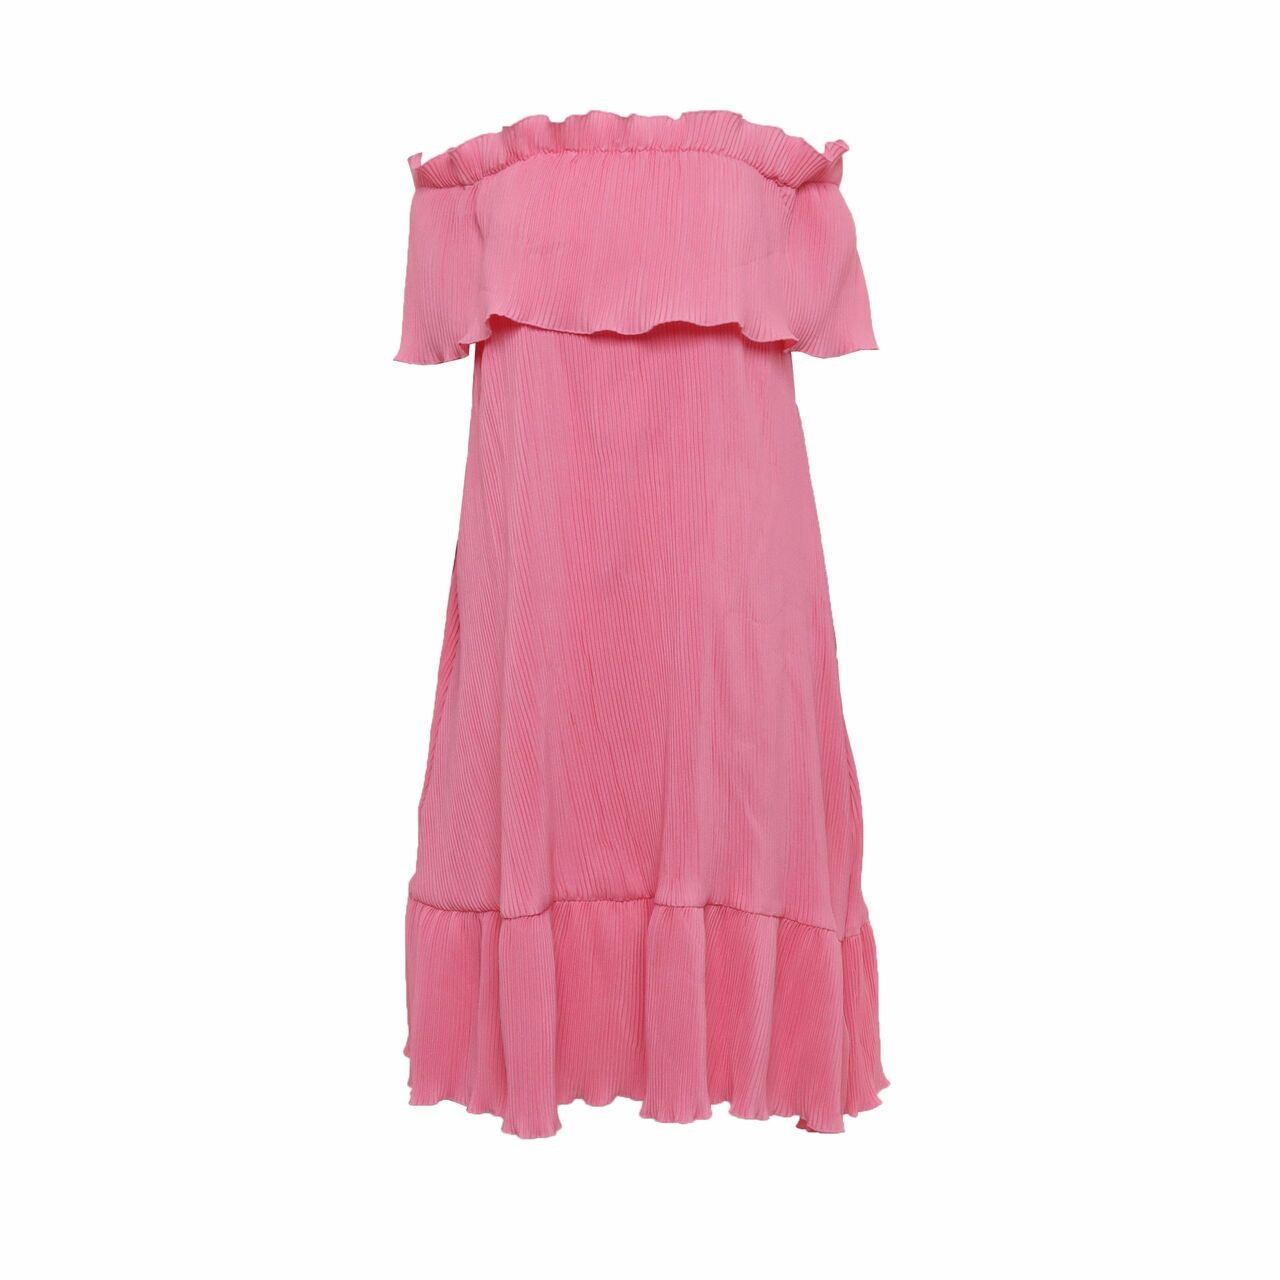 Claire Cynthia Tan Pink Mini Dress